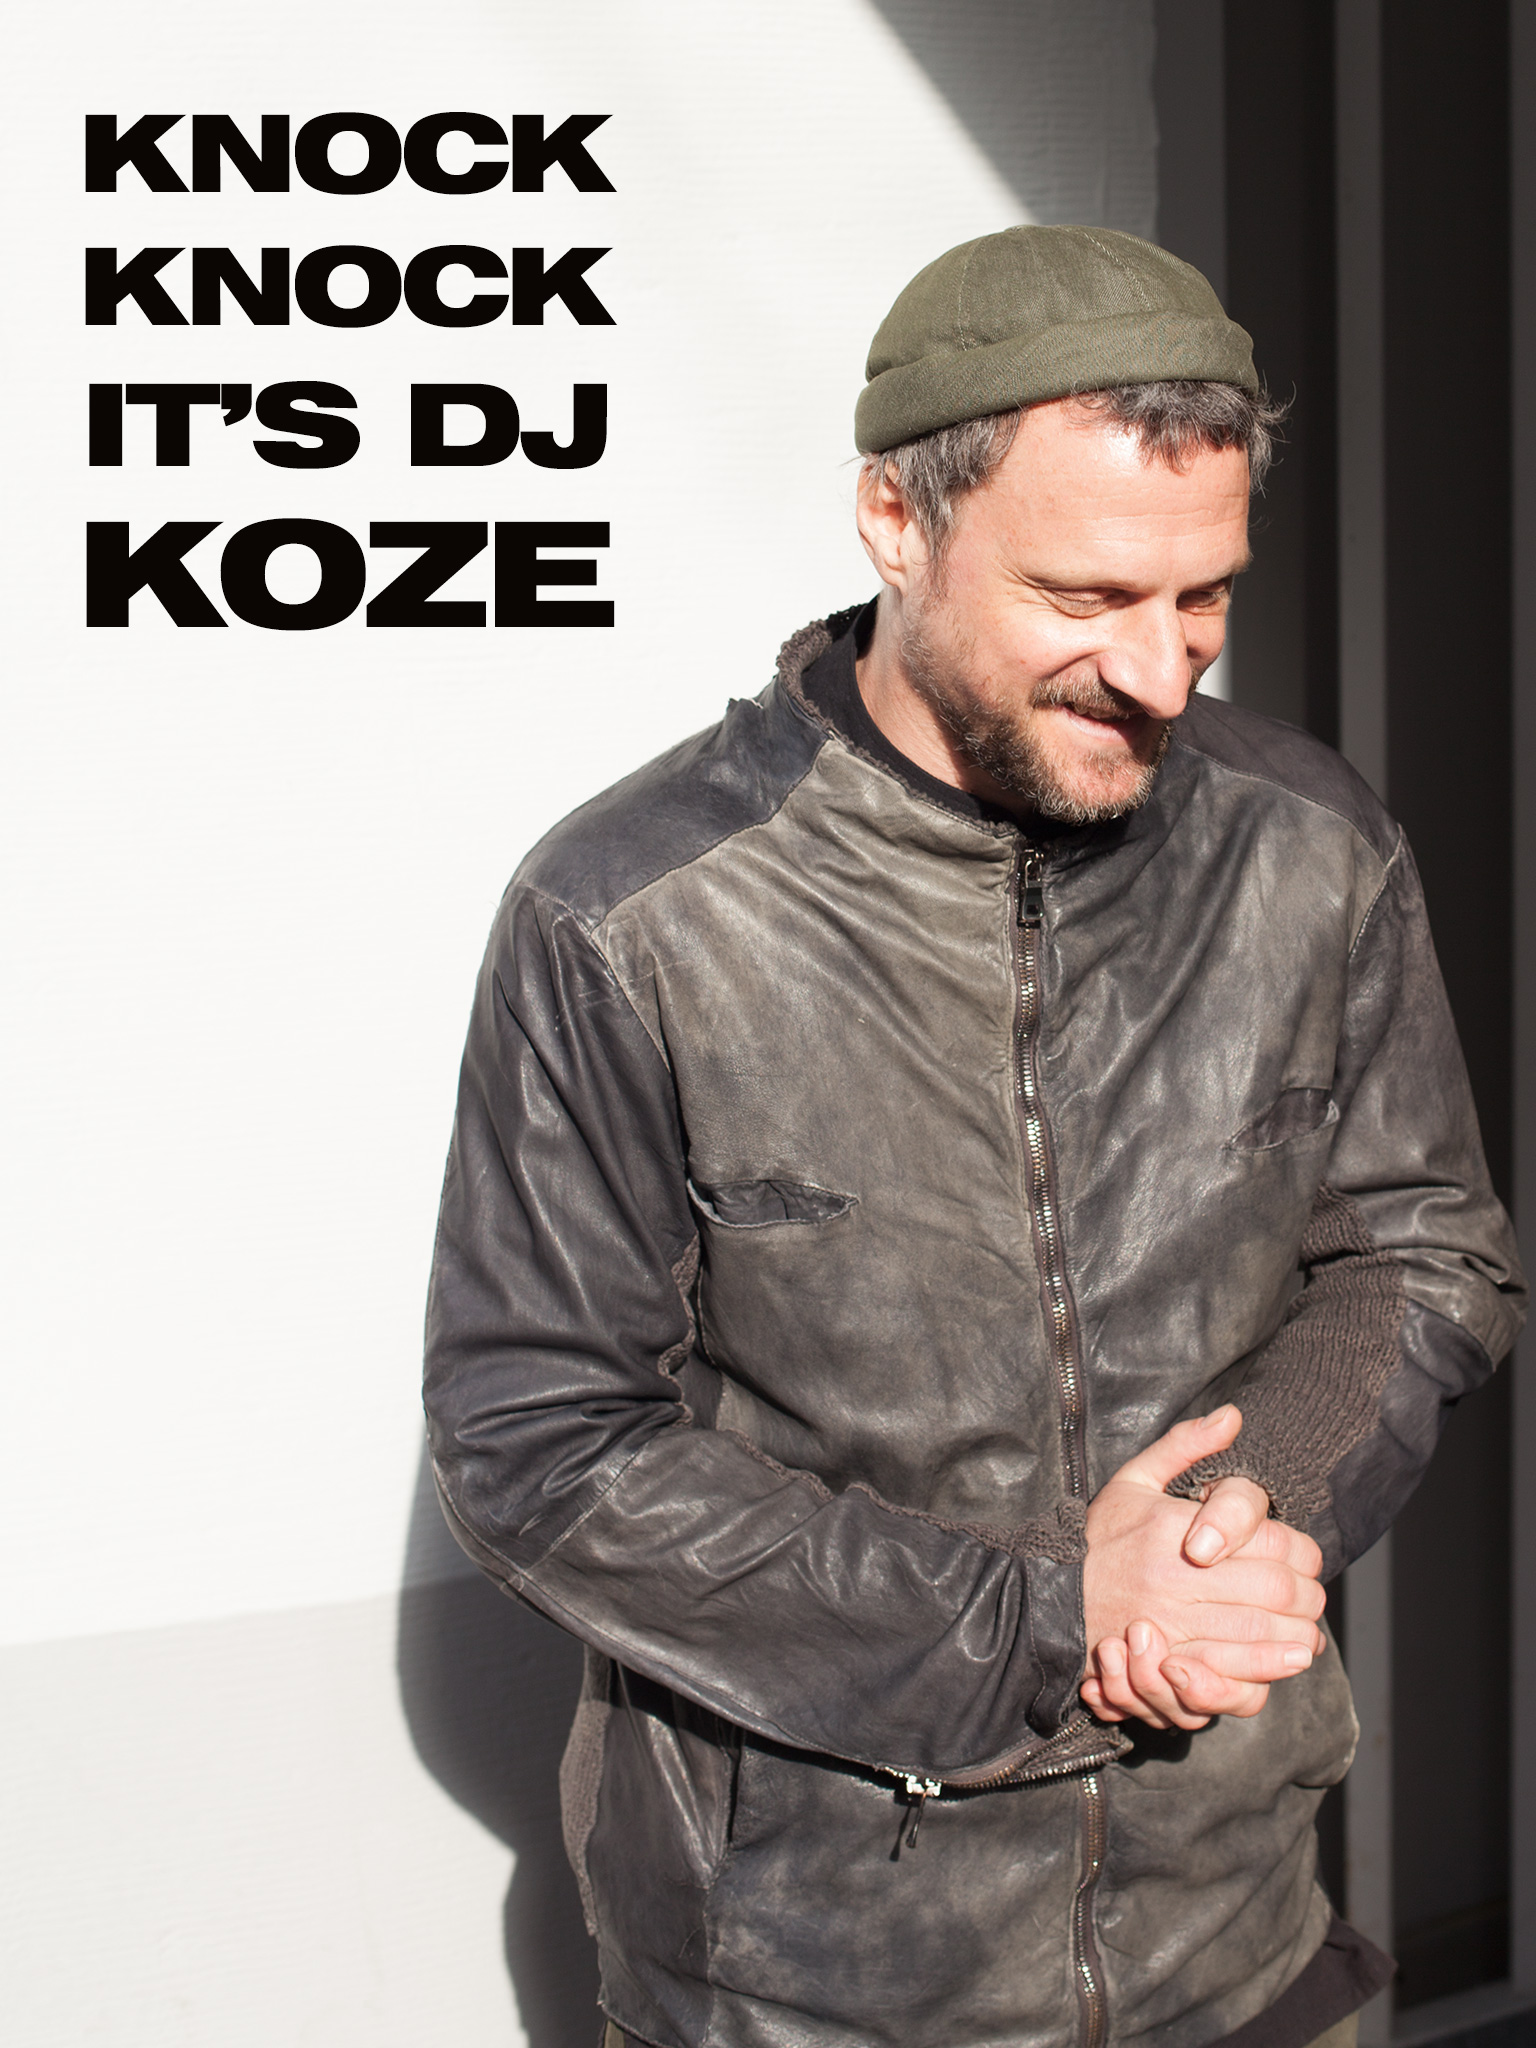 Knock knock, it's DJ Koze